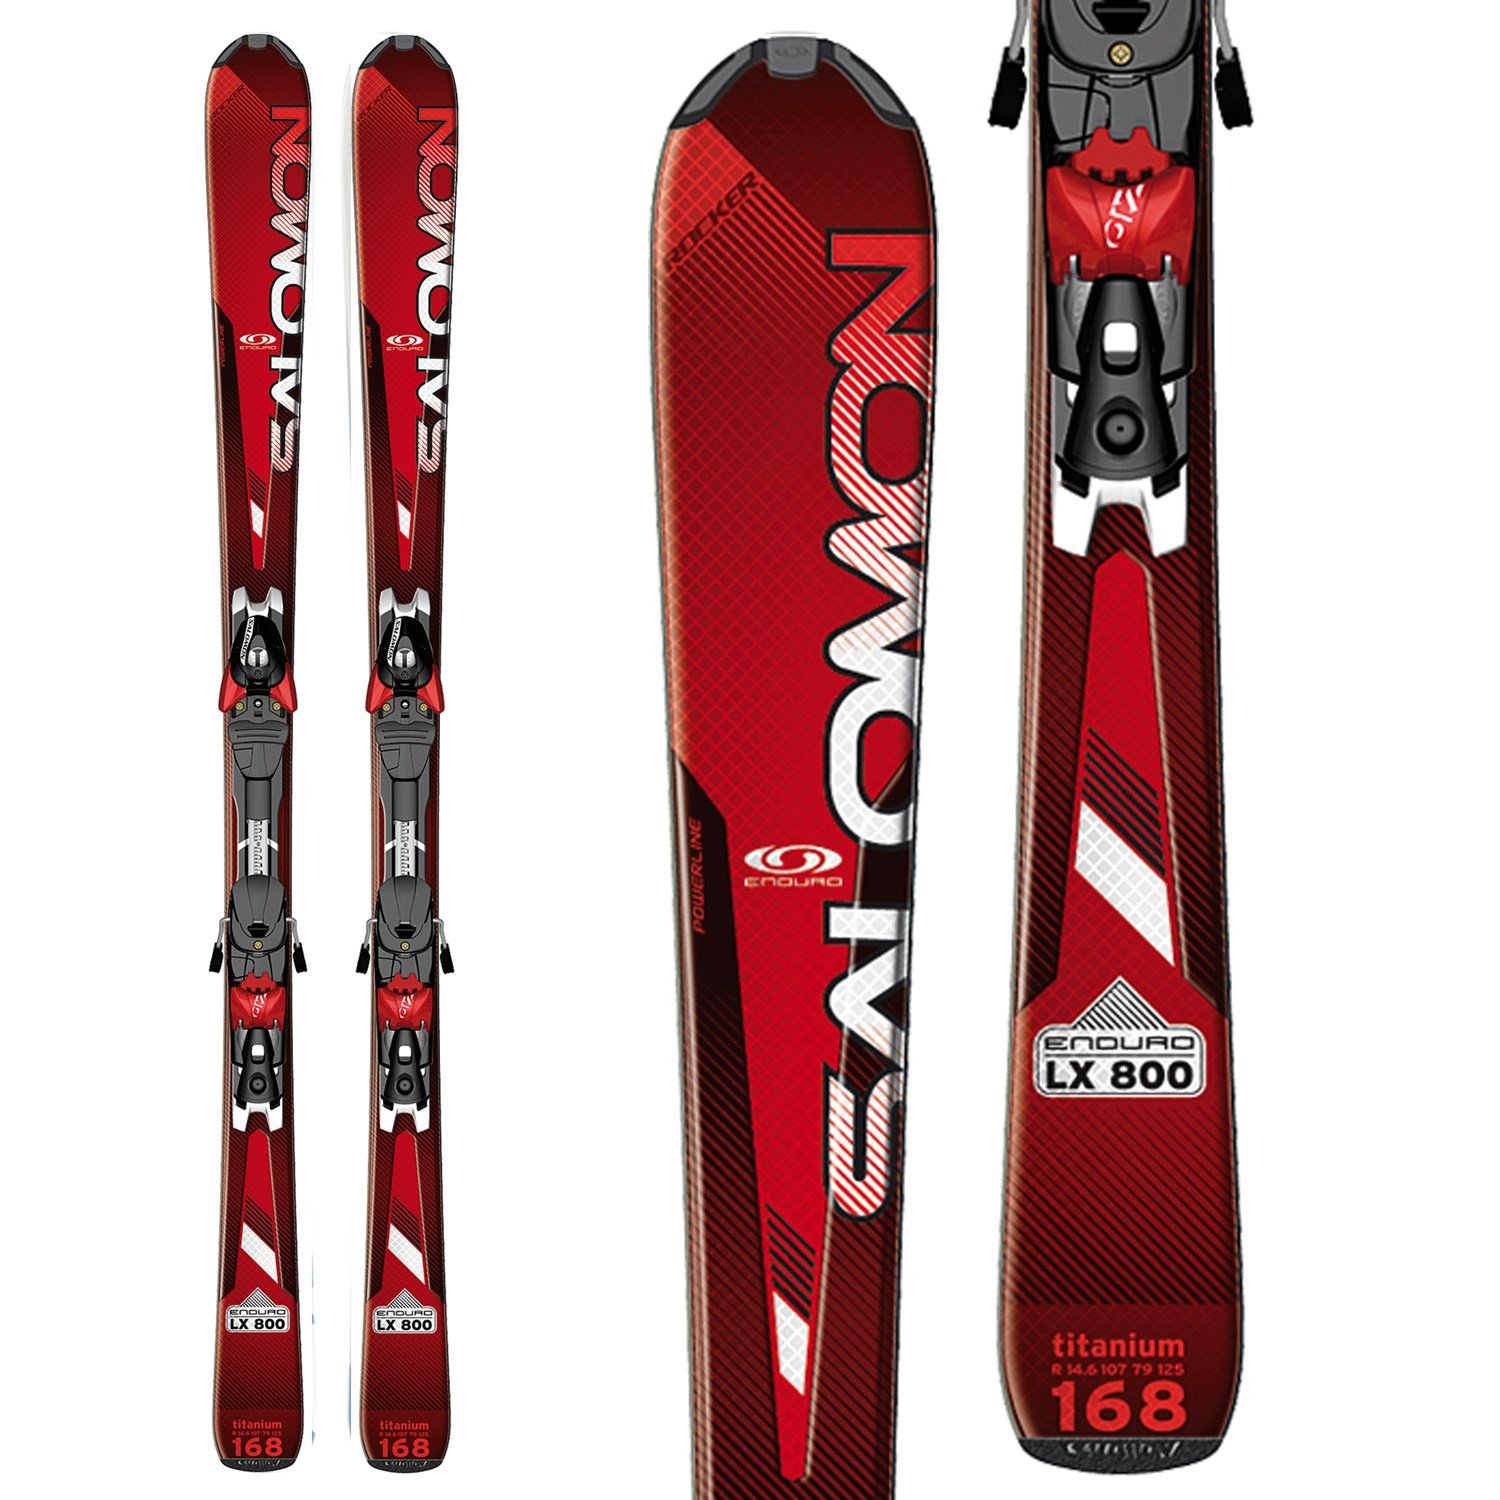 Salomon Enduro LX 800 Skis Z10 Bindings 2012 | evo